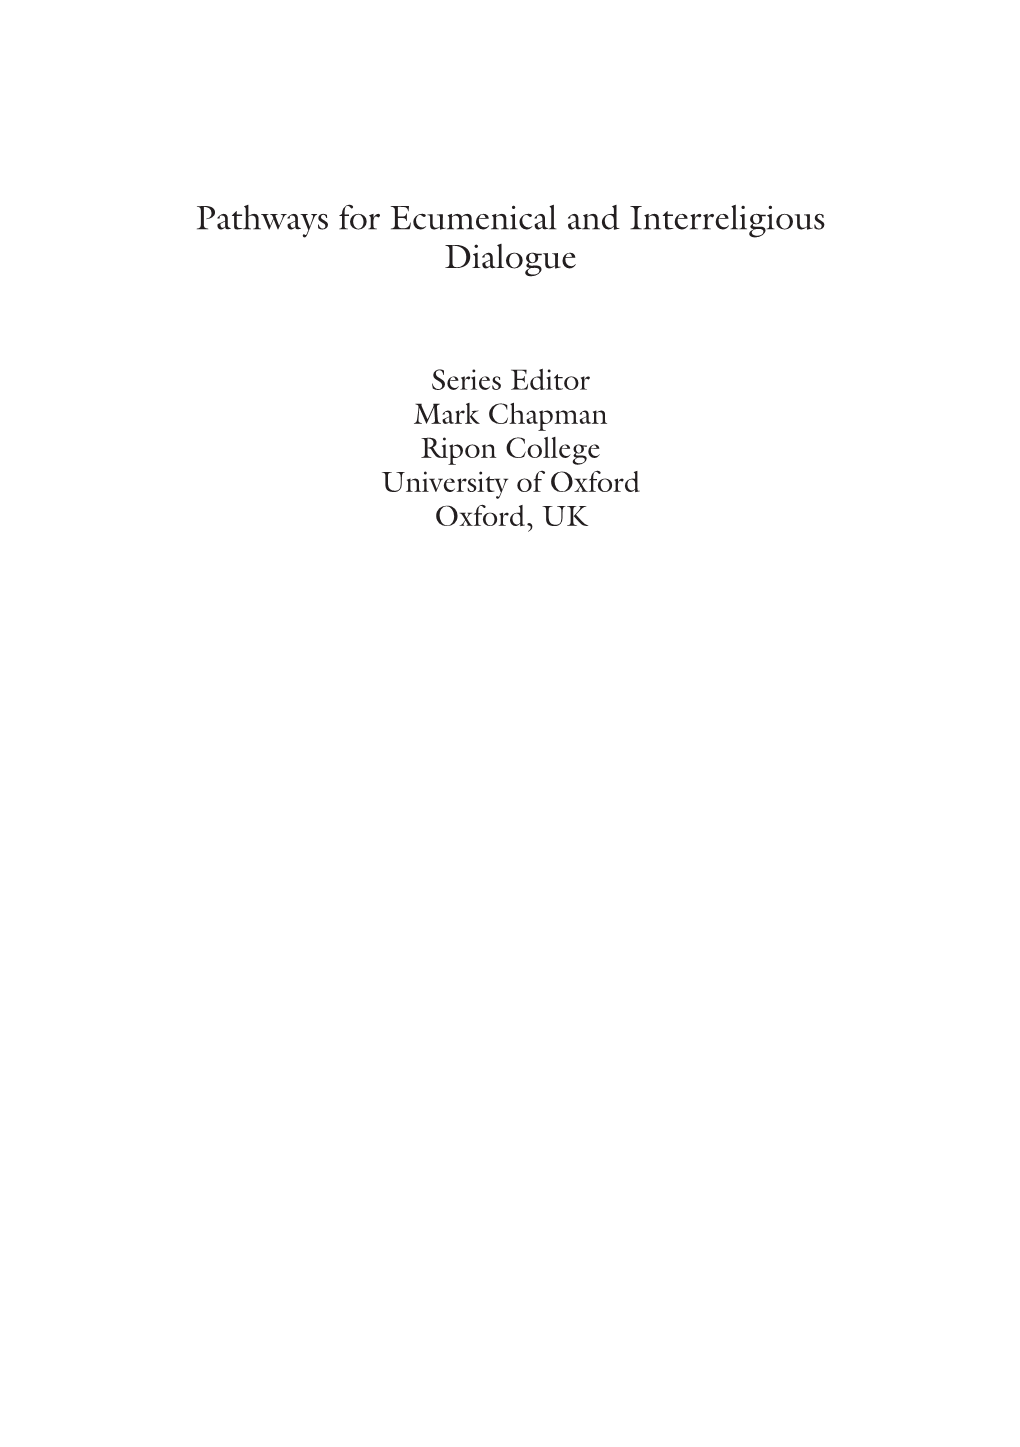 Pathways for Ecumenical and Interreligious Dialogue